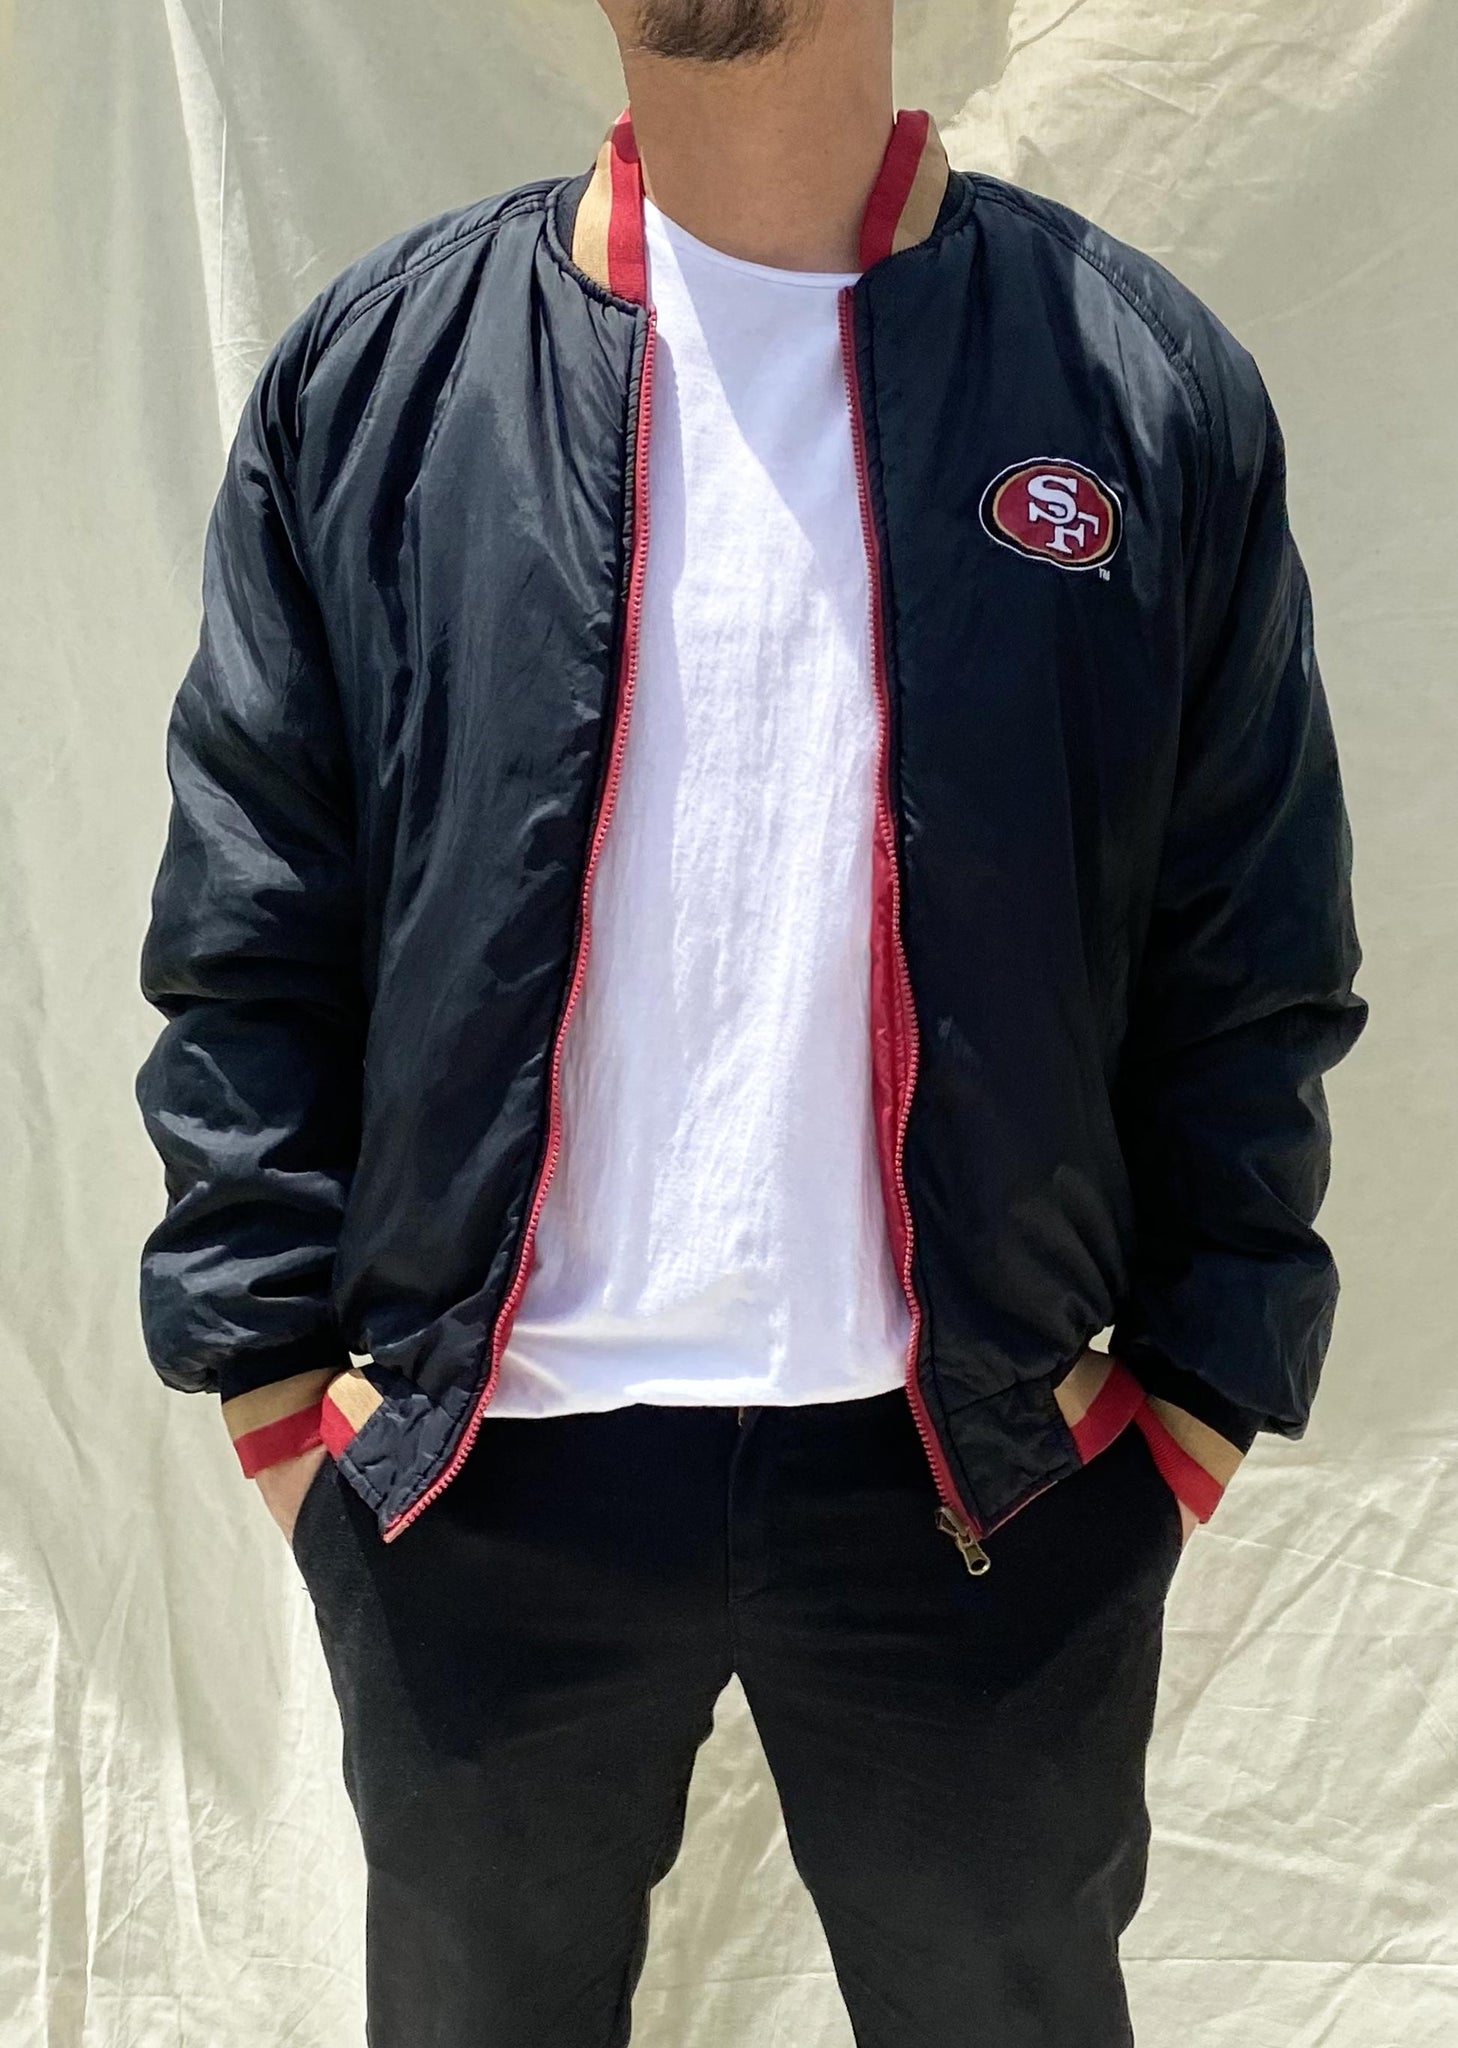 NFL St. Louis Rams Bomber Jacket Big Size, Men's Fashion, Coats